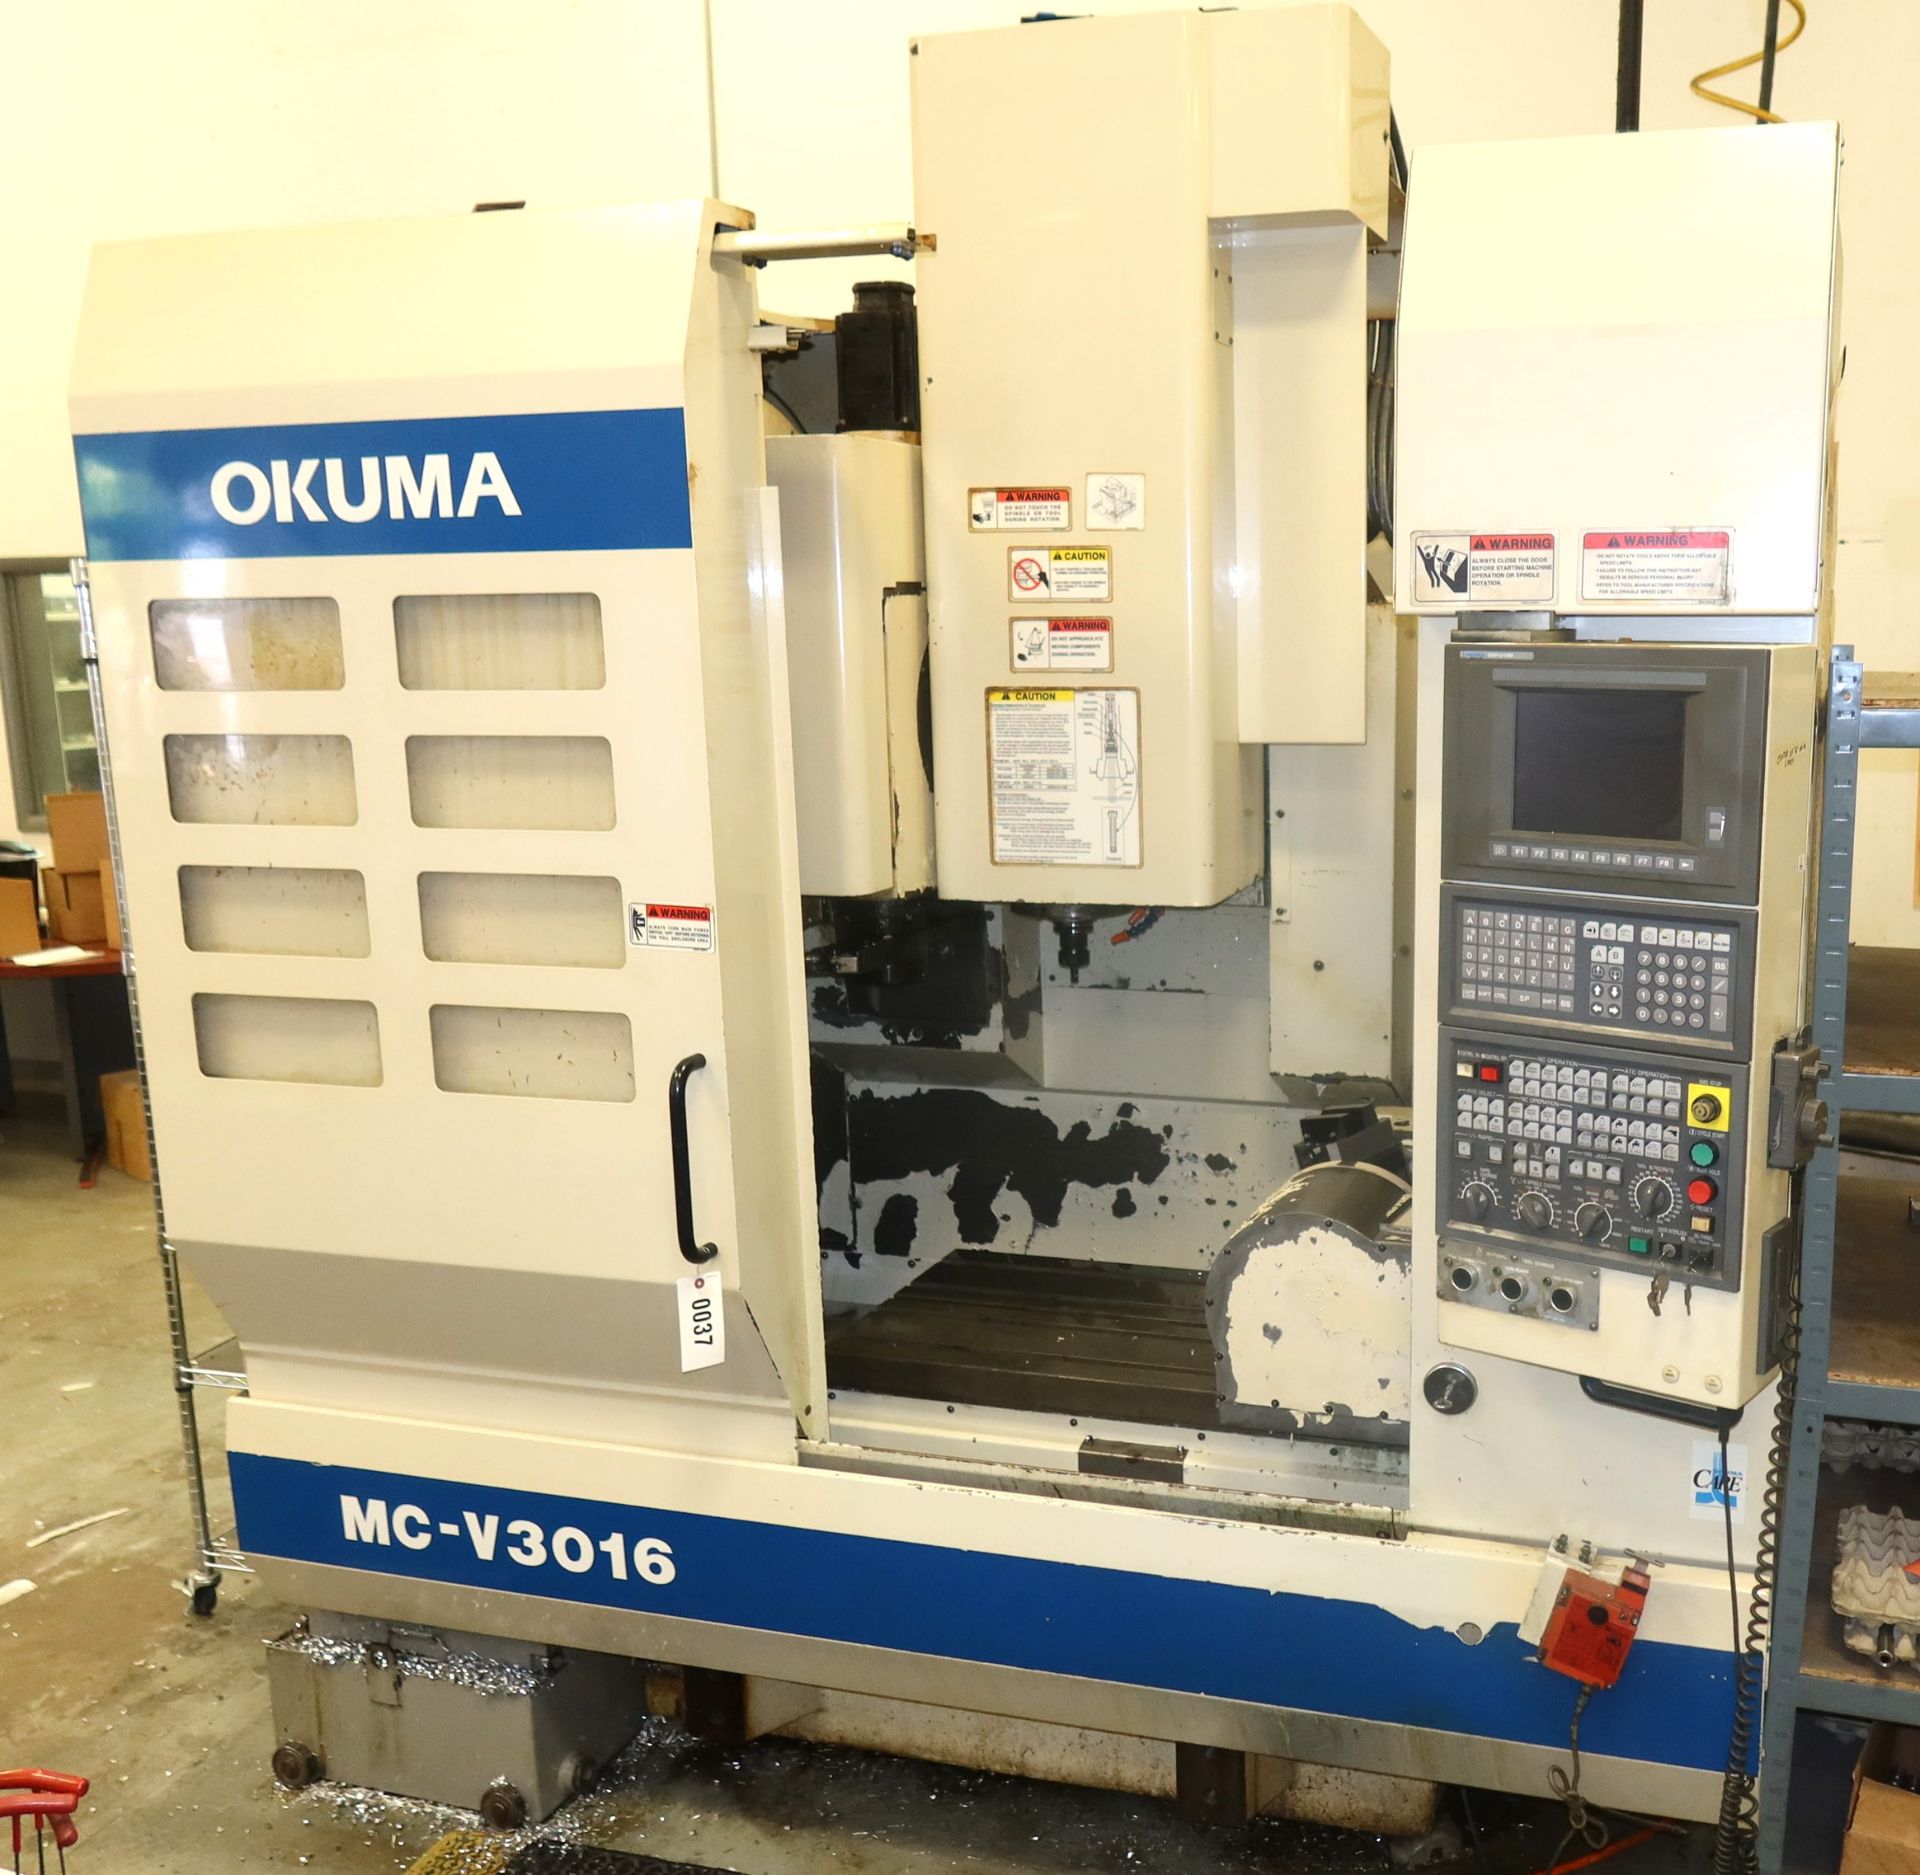 2003 OKUMA MC-V3016 5-AXIS CNC VERTICAL MACHINING CENTER, SN 0028